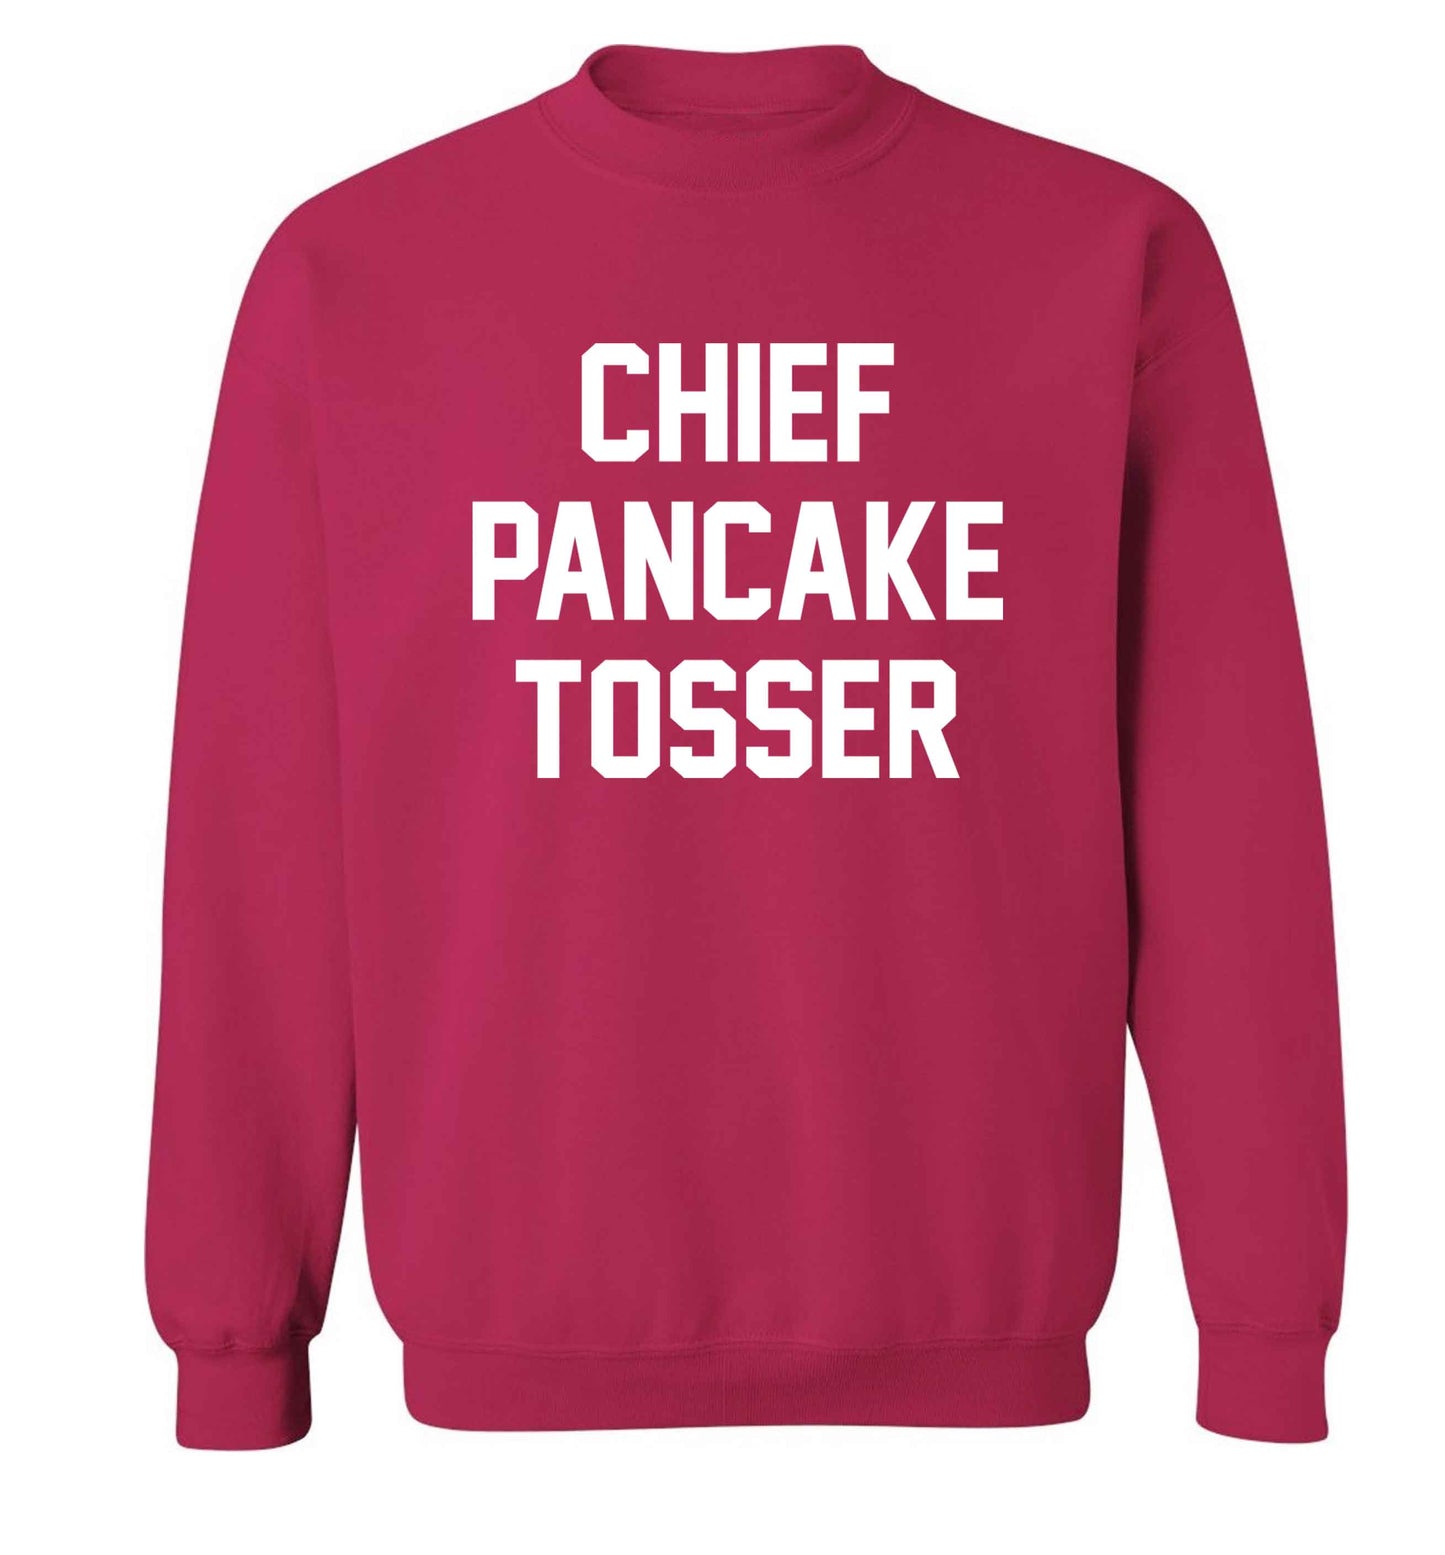 Chief pancake tosser adult's unisex pink sweater 2XL